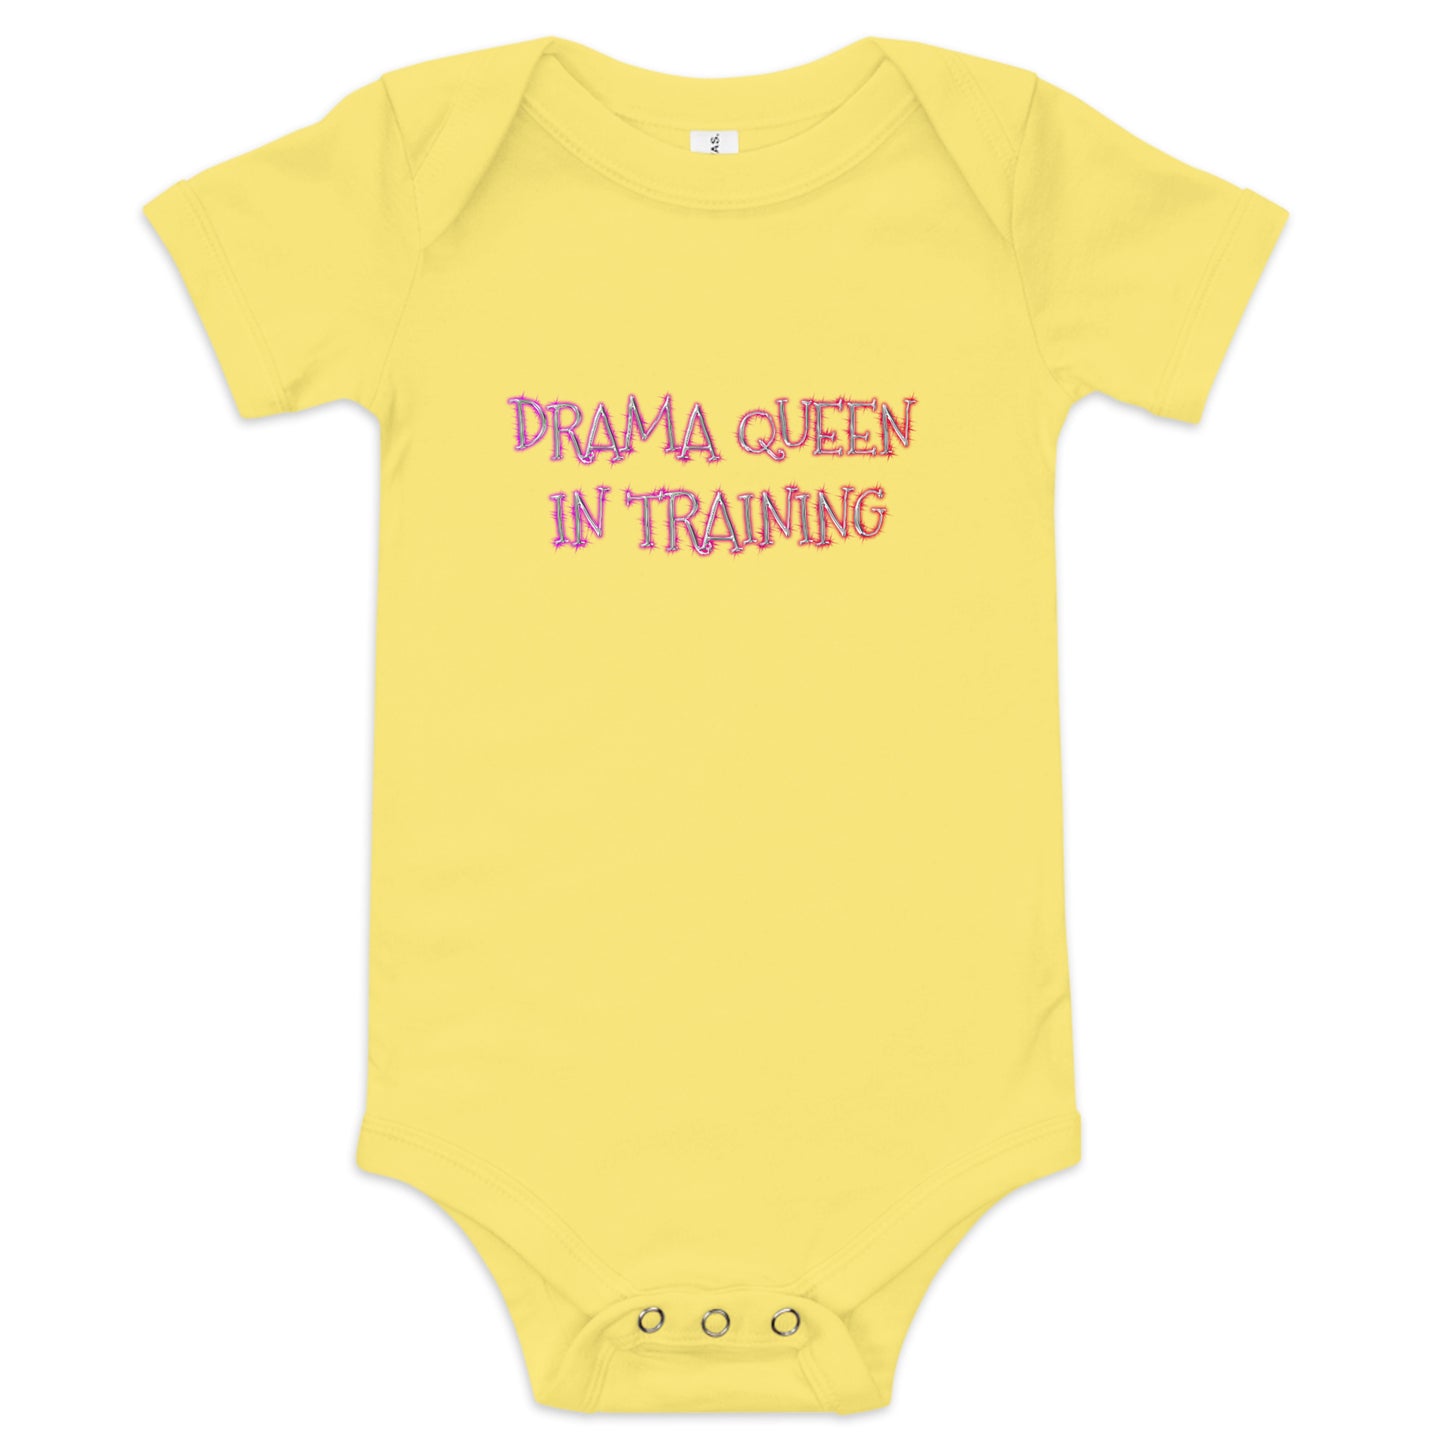 Drama Queen in Training Baby Bodysuit